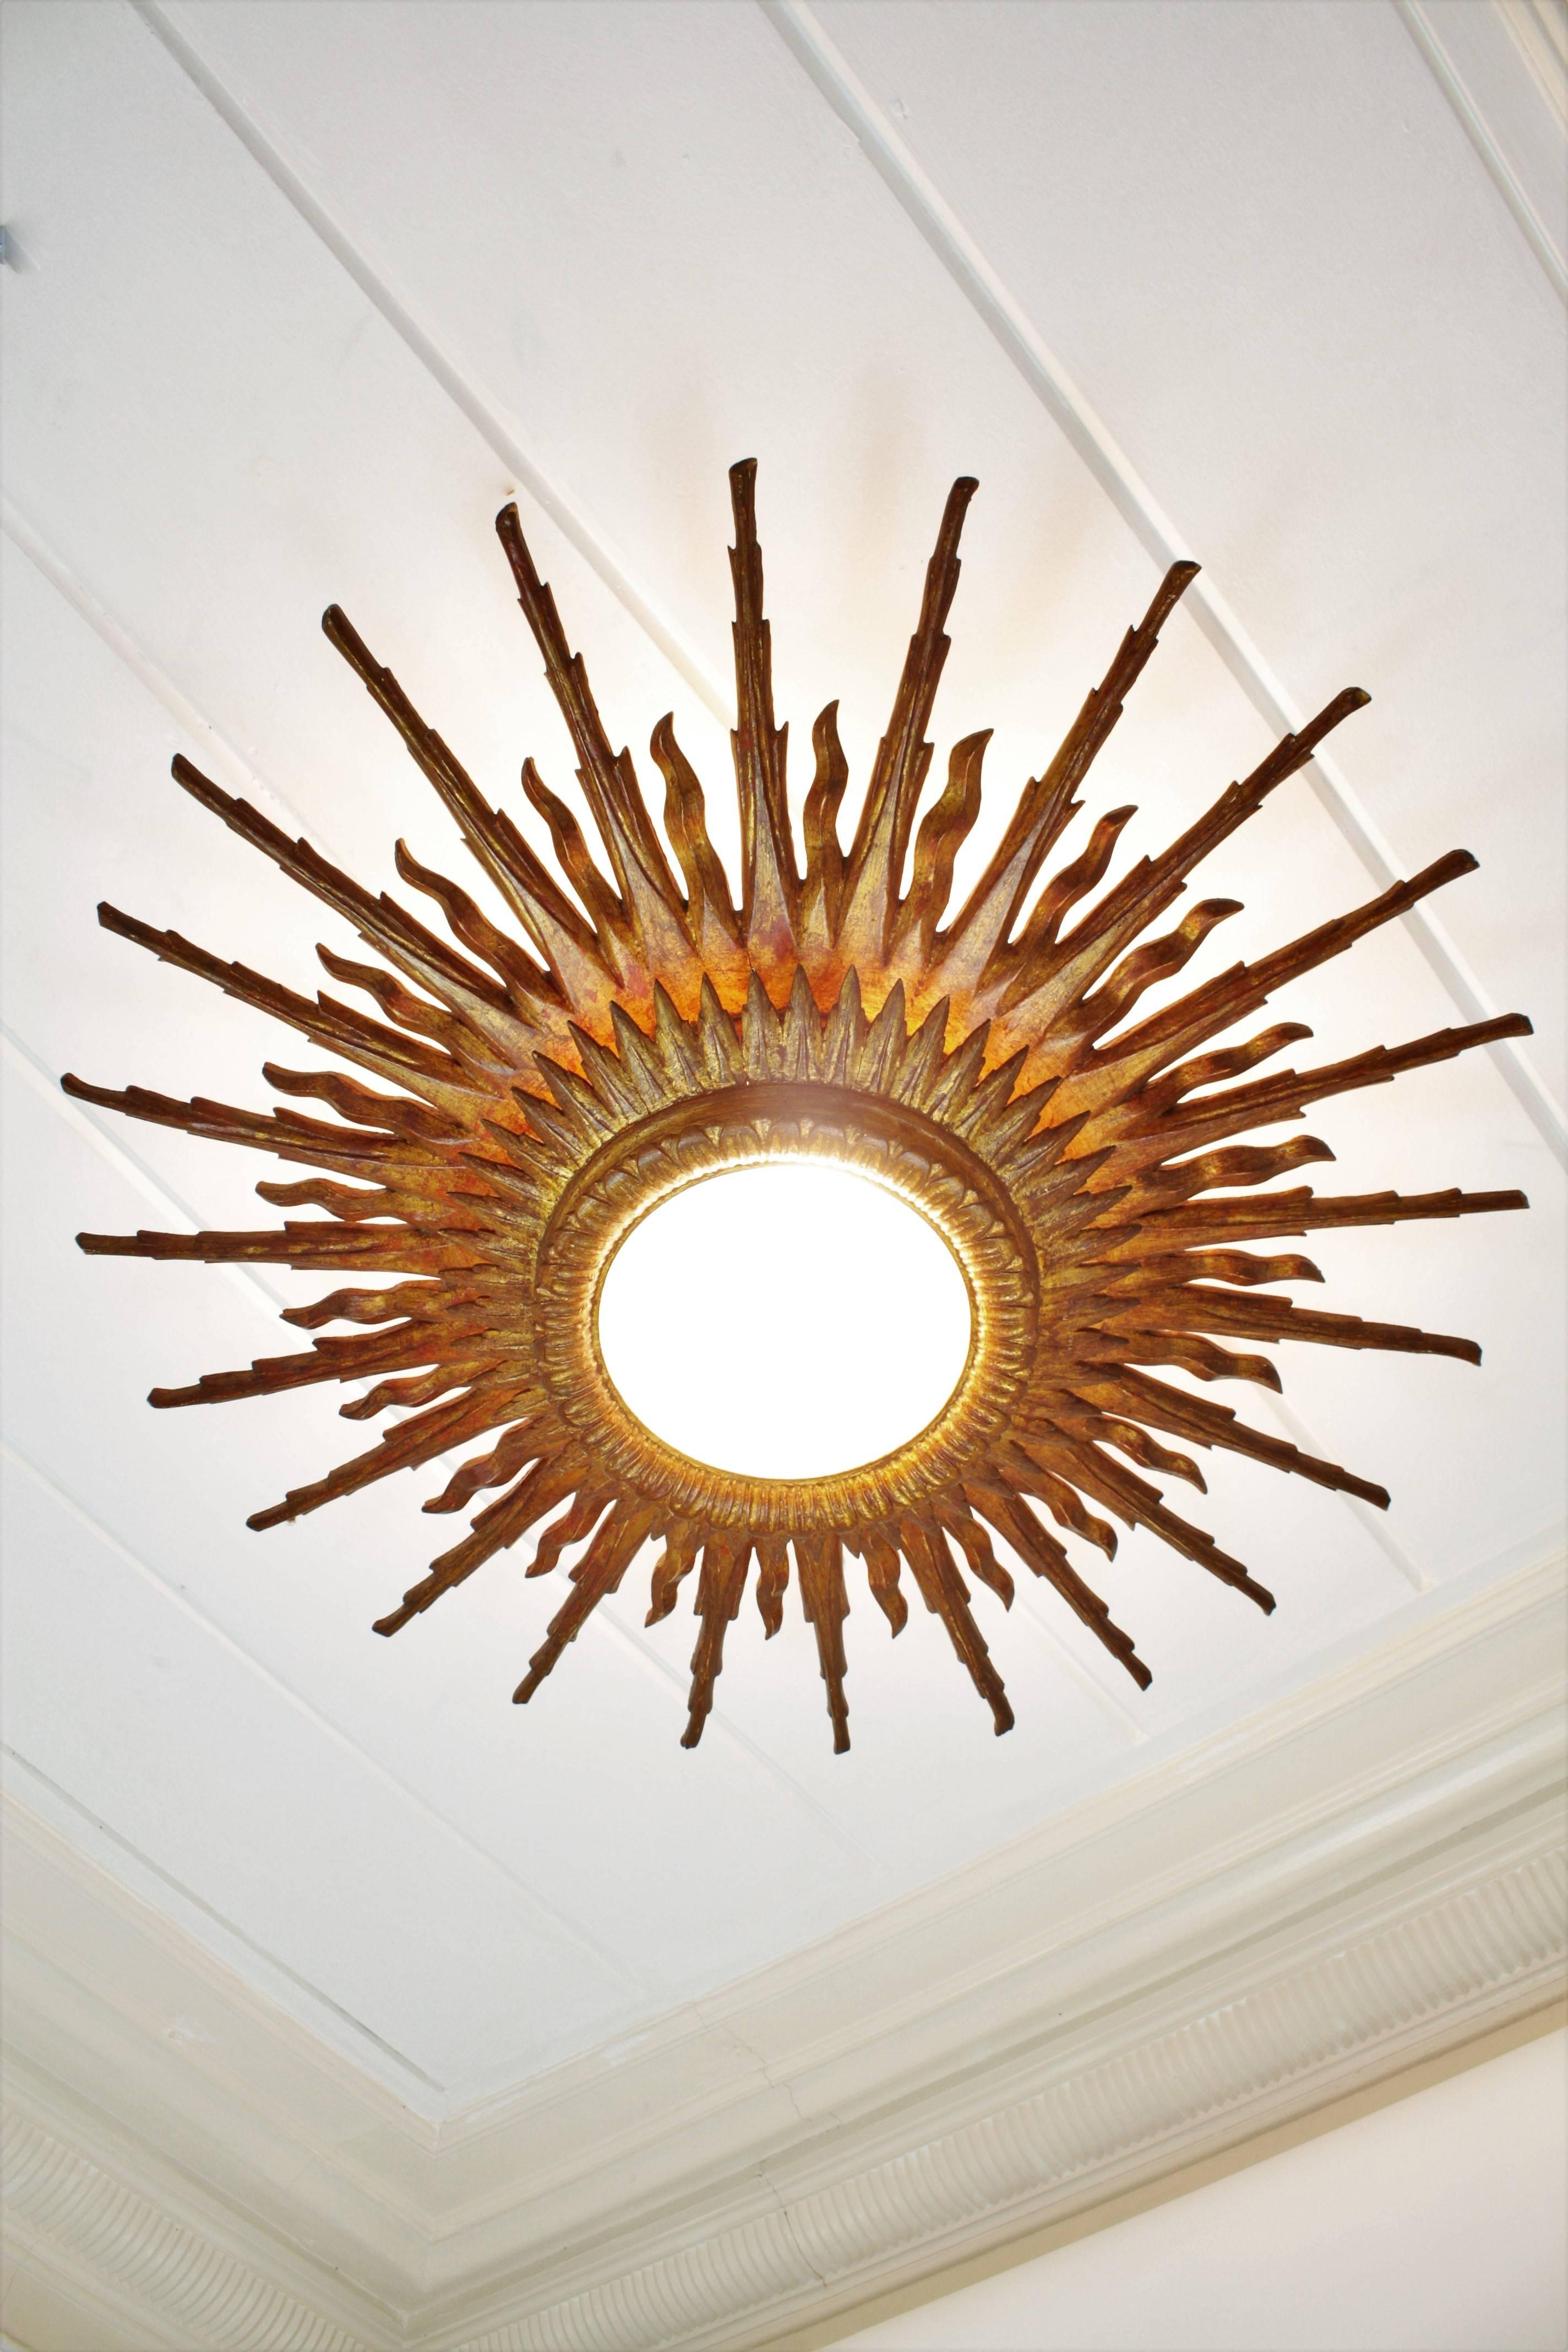 Spanish Giant 1940s Baroque Style Giltwood Sunburst Ceiling Light Fixture or Mirror